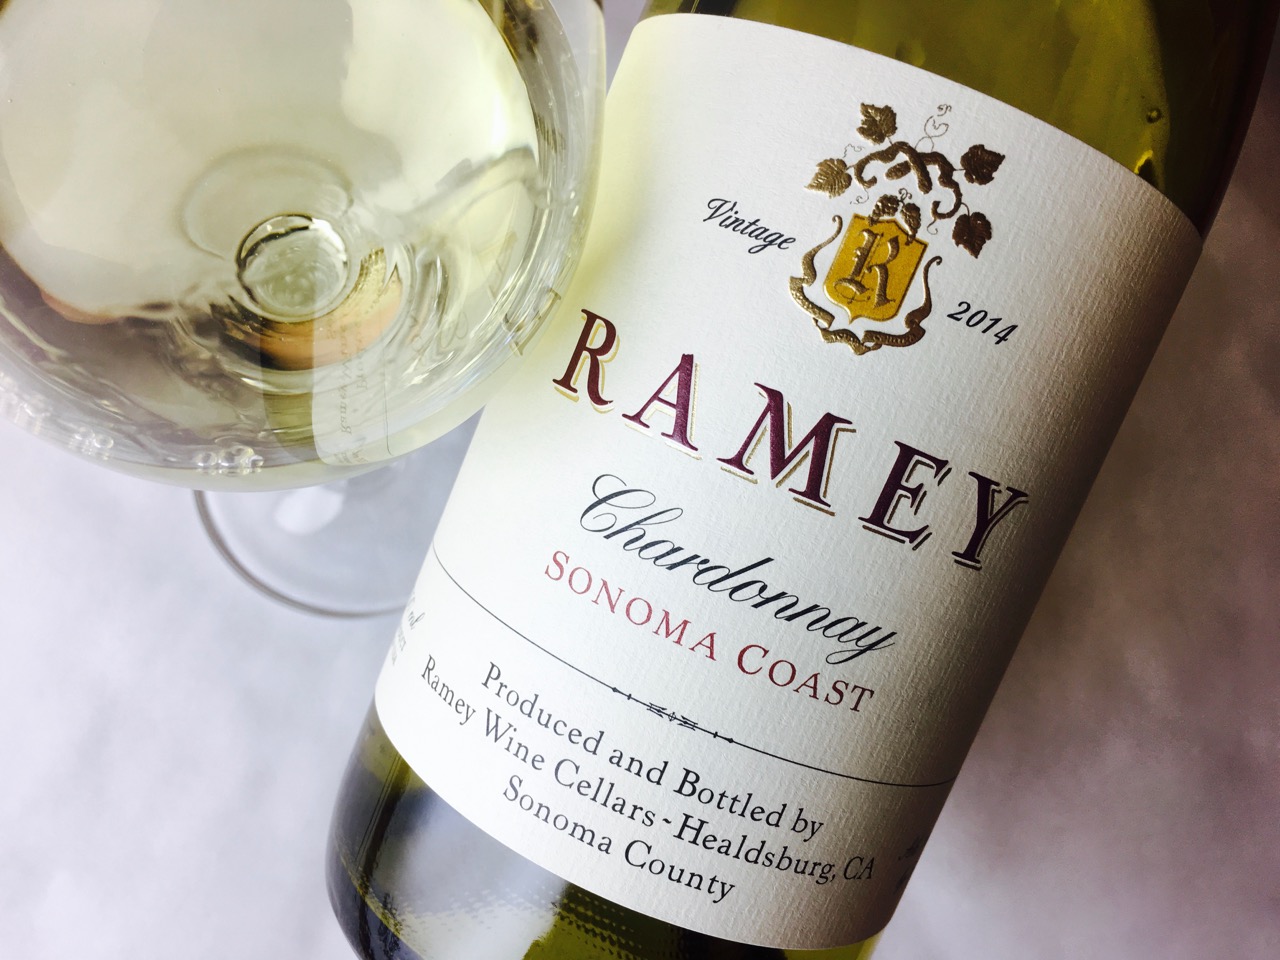 2014 Ramey Chardonnay Sonoma Coast